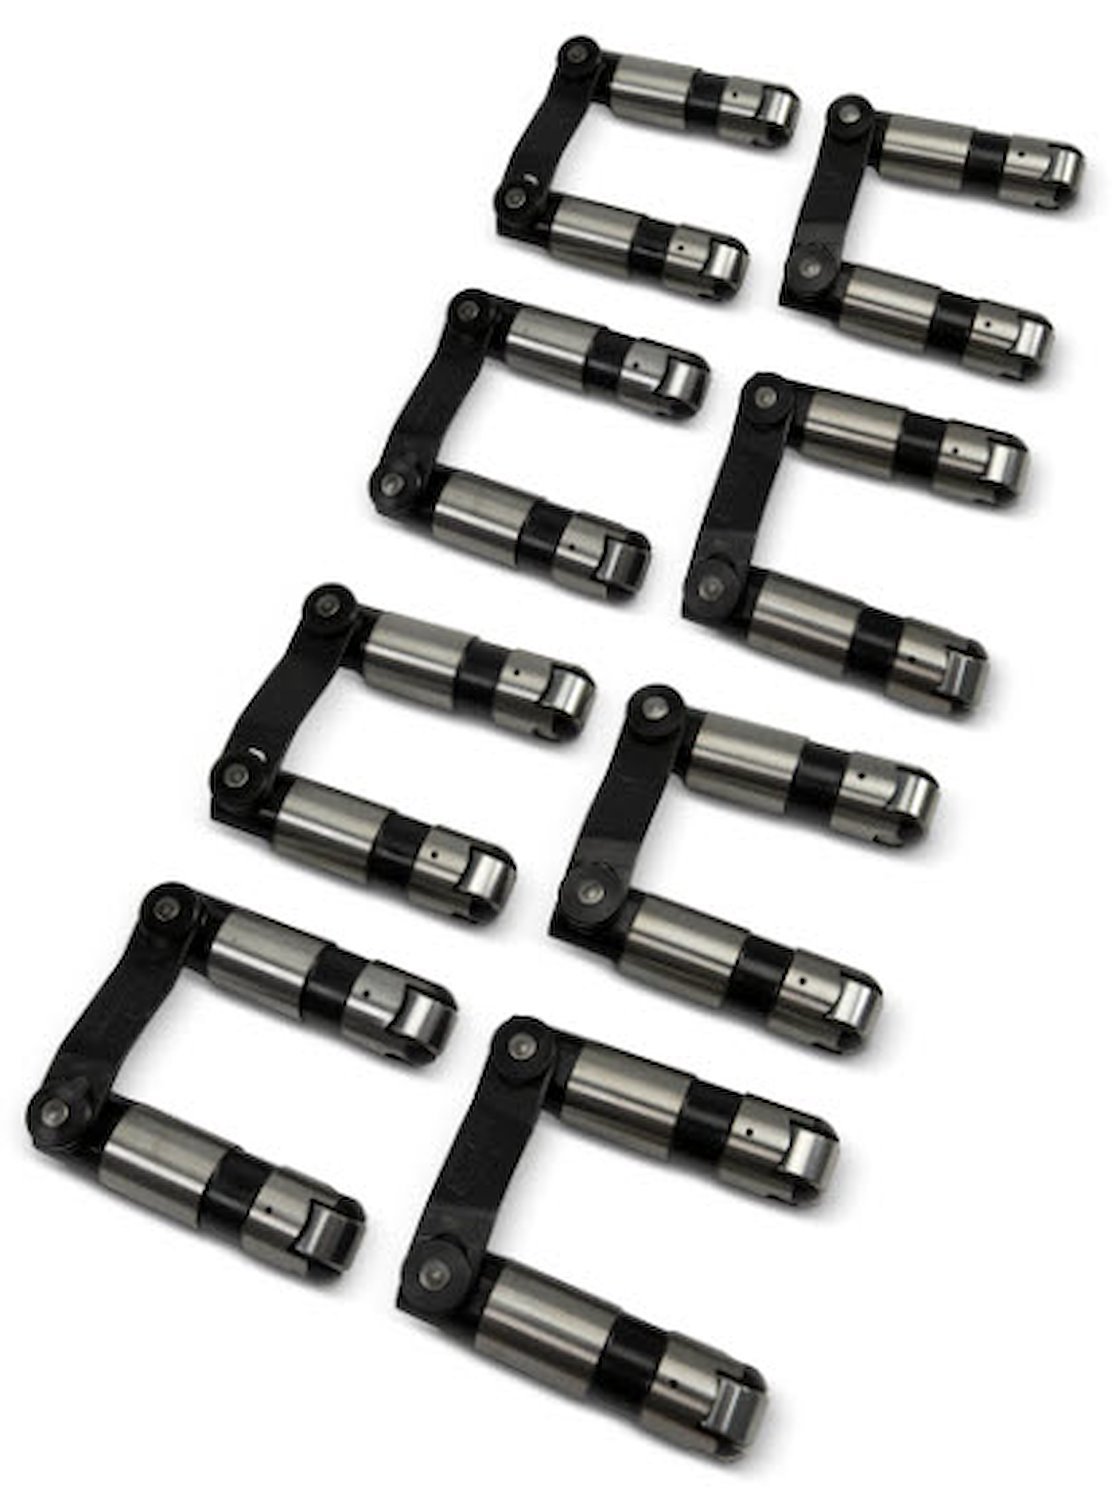 89211-16 Retro-Fit Hydraulic Roller Lifters for Mopar 383-440 ci. Big Block Engines w/OEM Flat Tappet Camshaft [16]